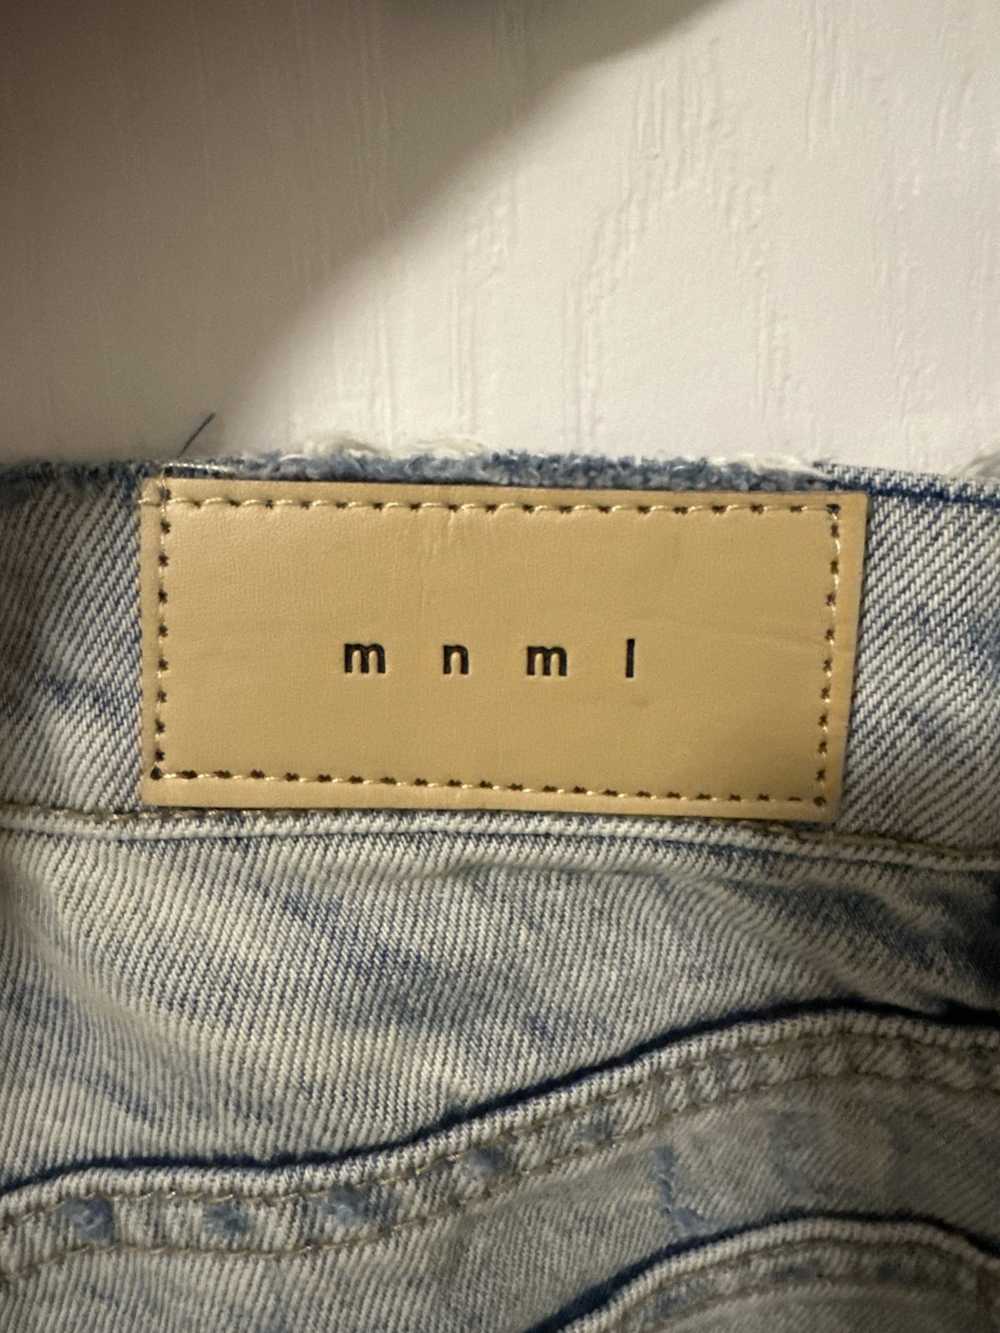 MNML Mens MNML Streetwear Jeans Size 31 - image 4